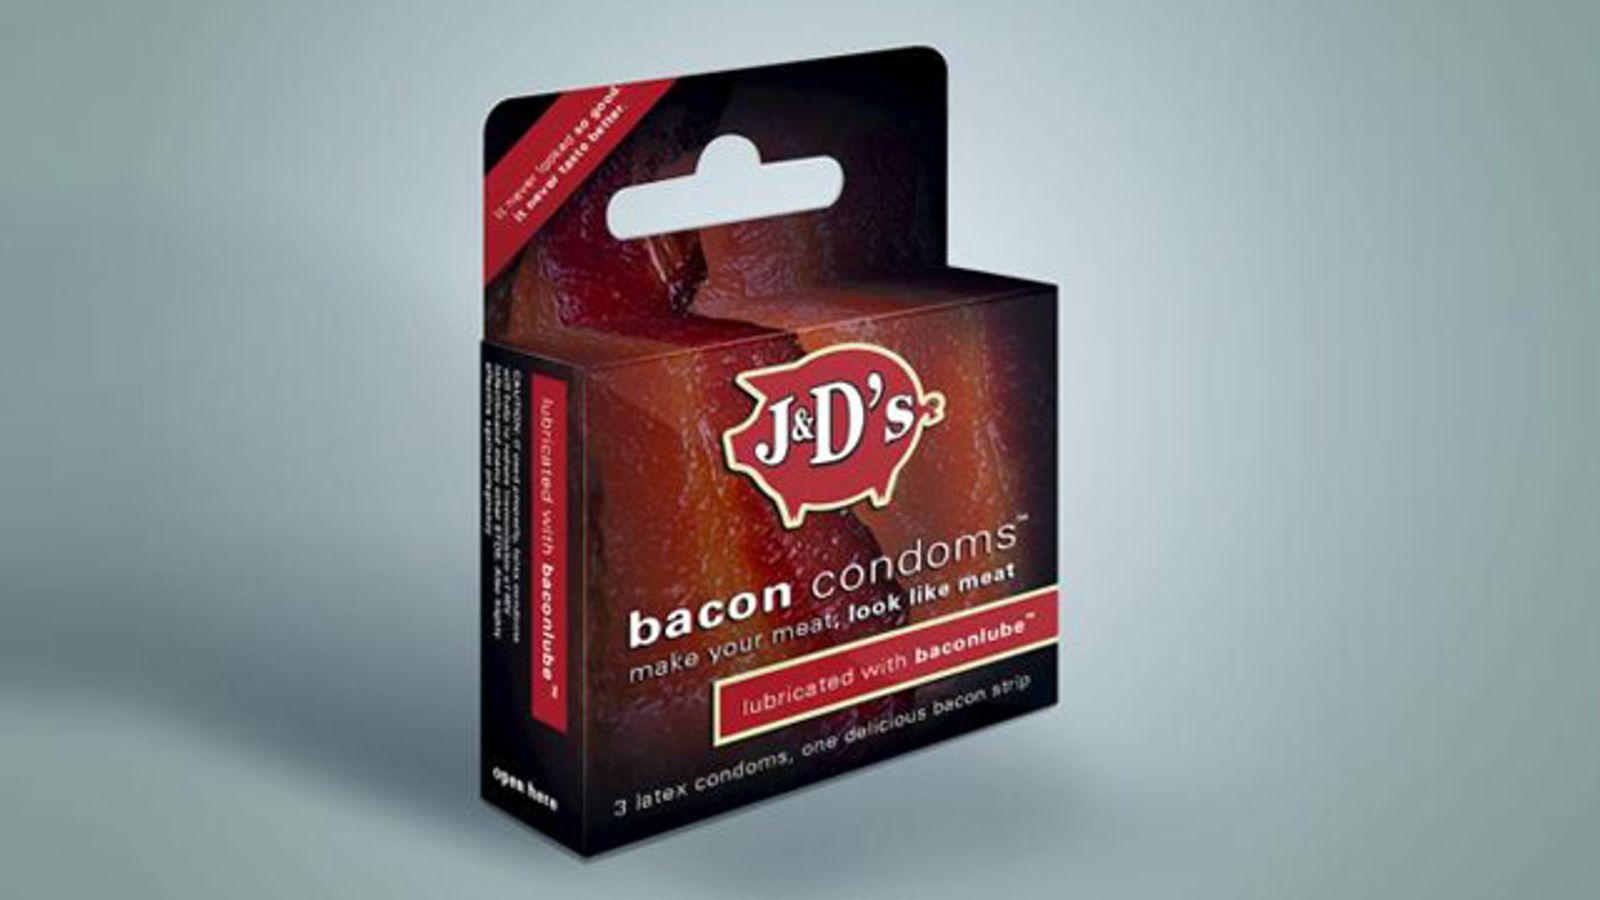 Bacon Condoms a Reality? REJOICE!